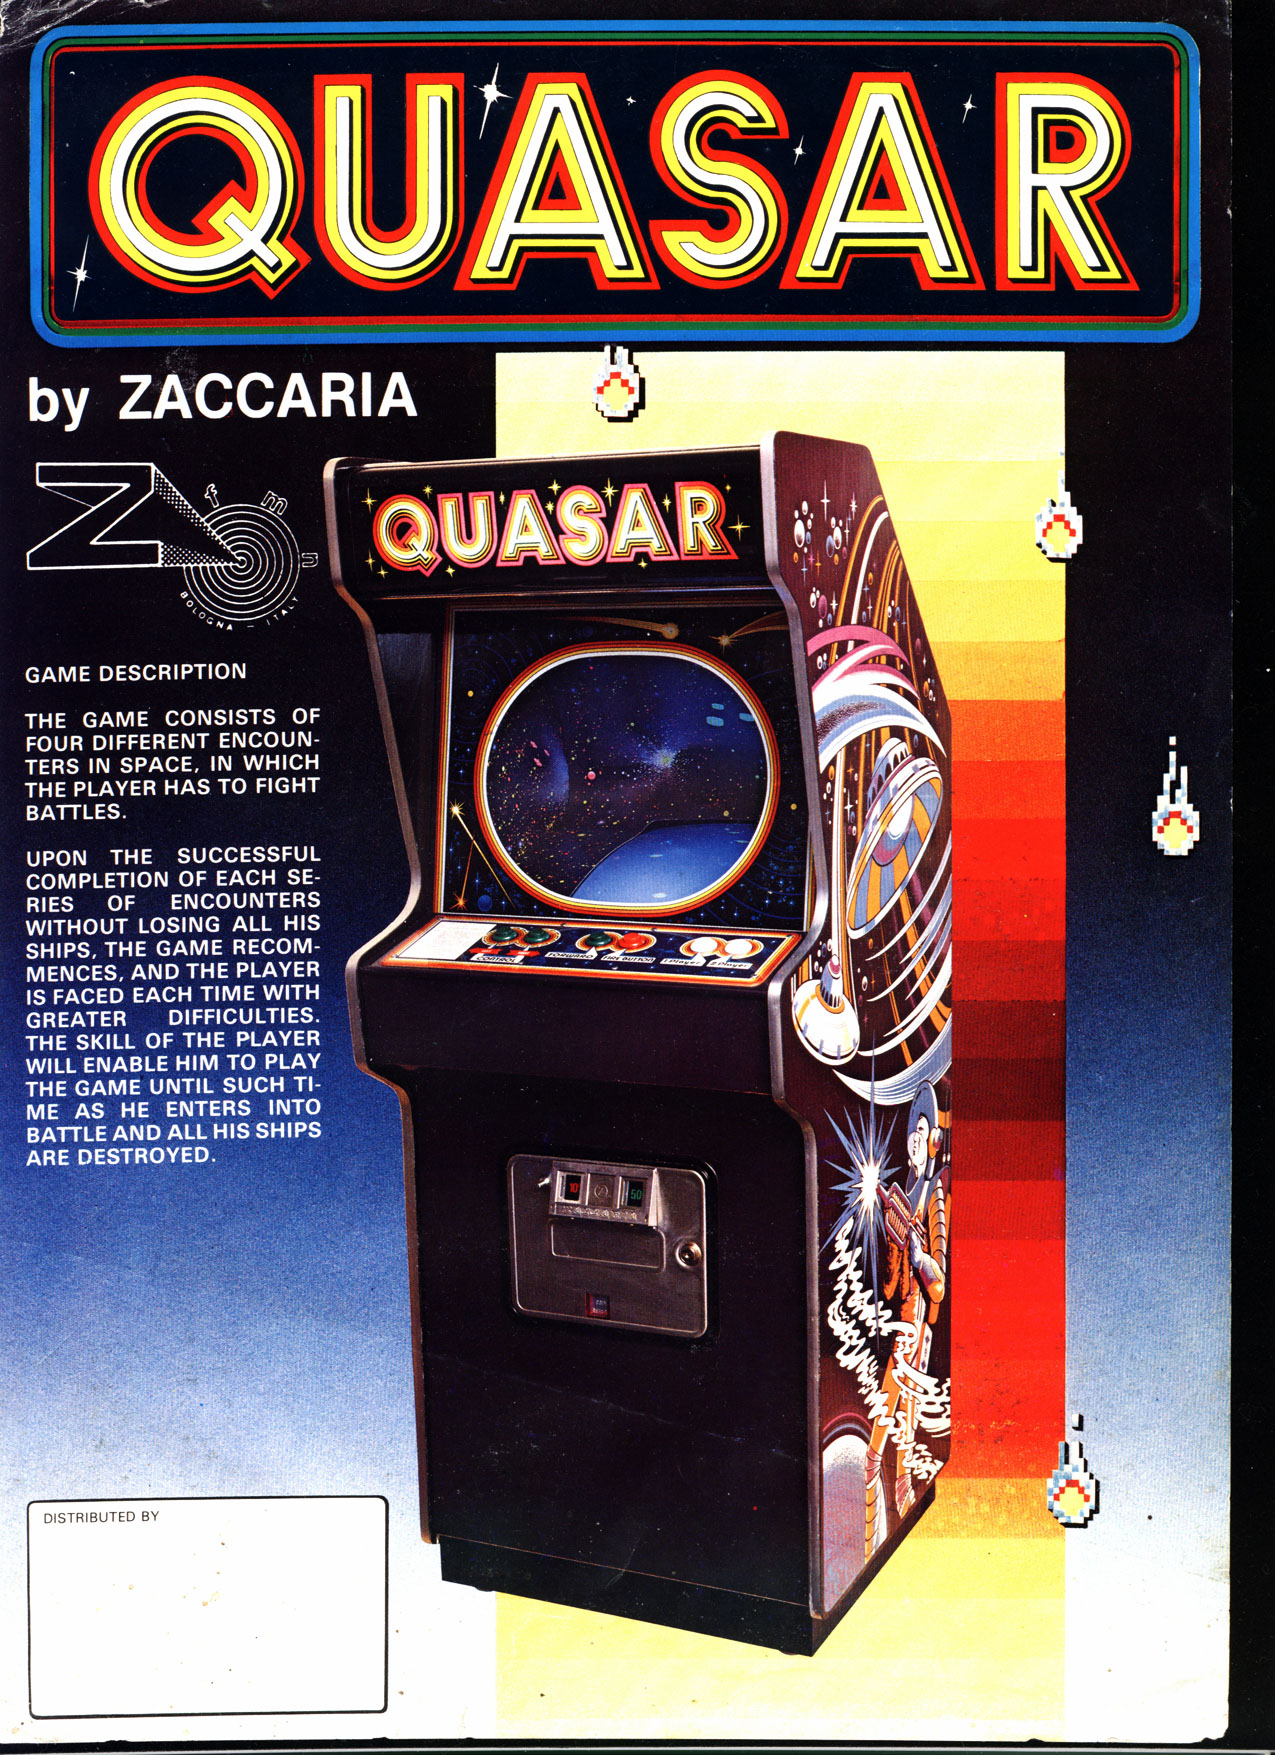 Quasar (set 1) flyer